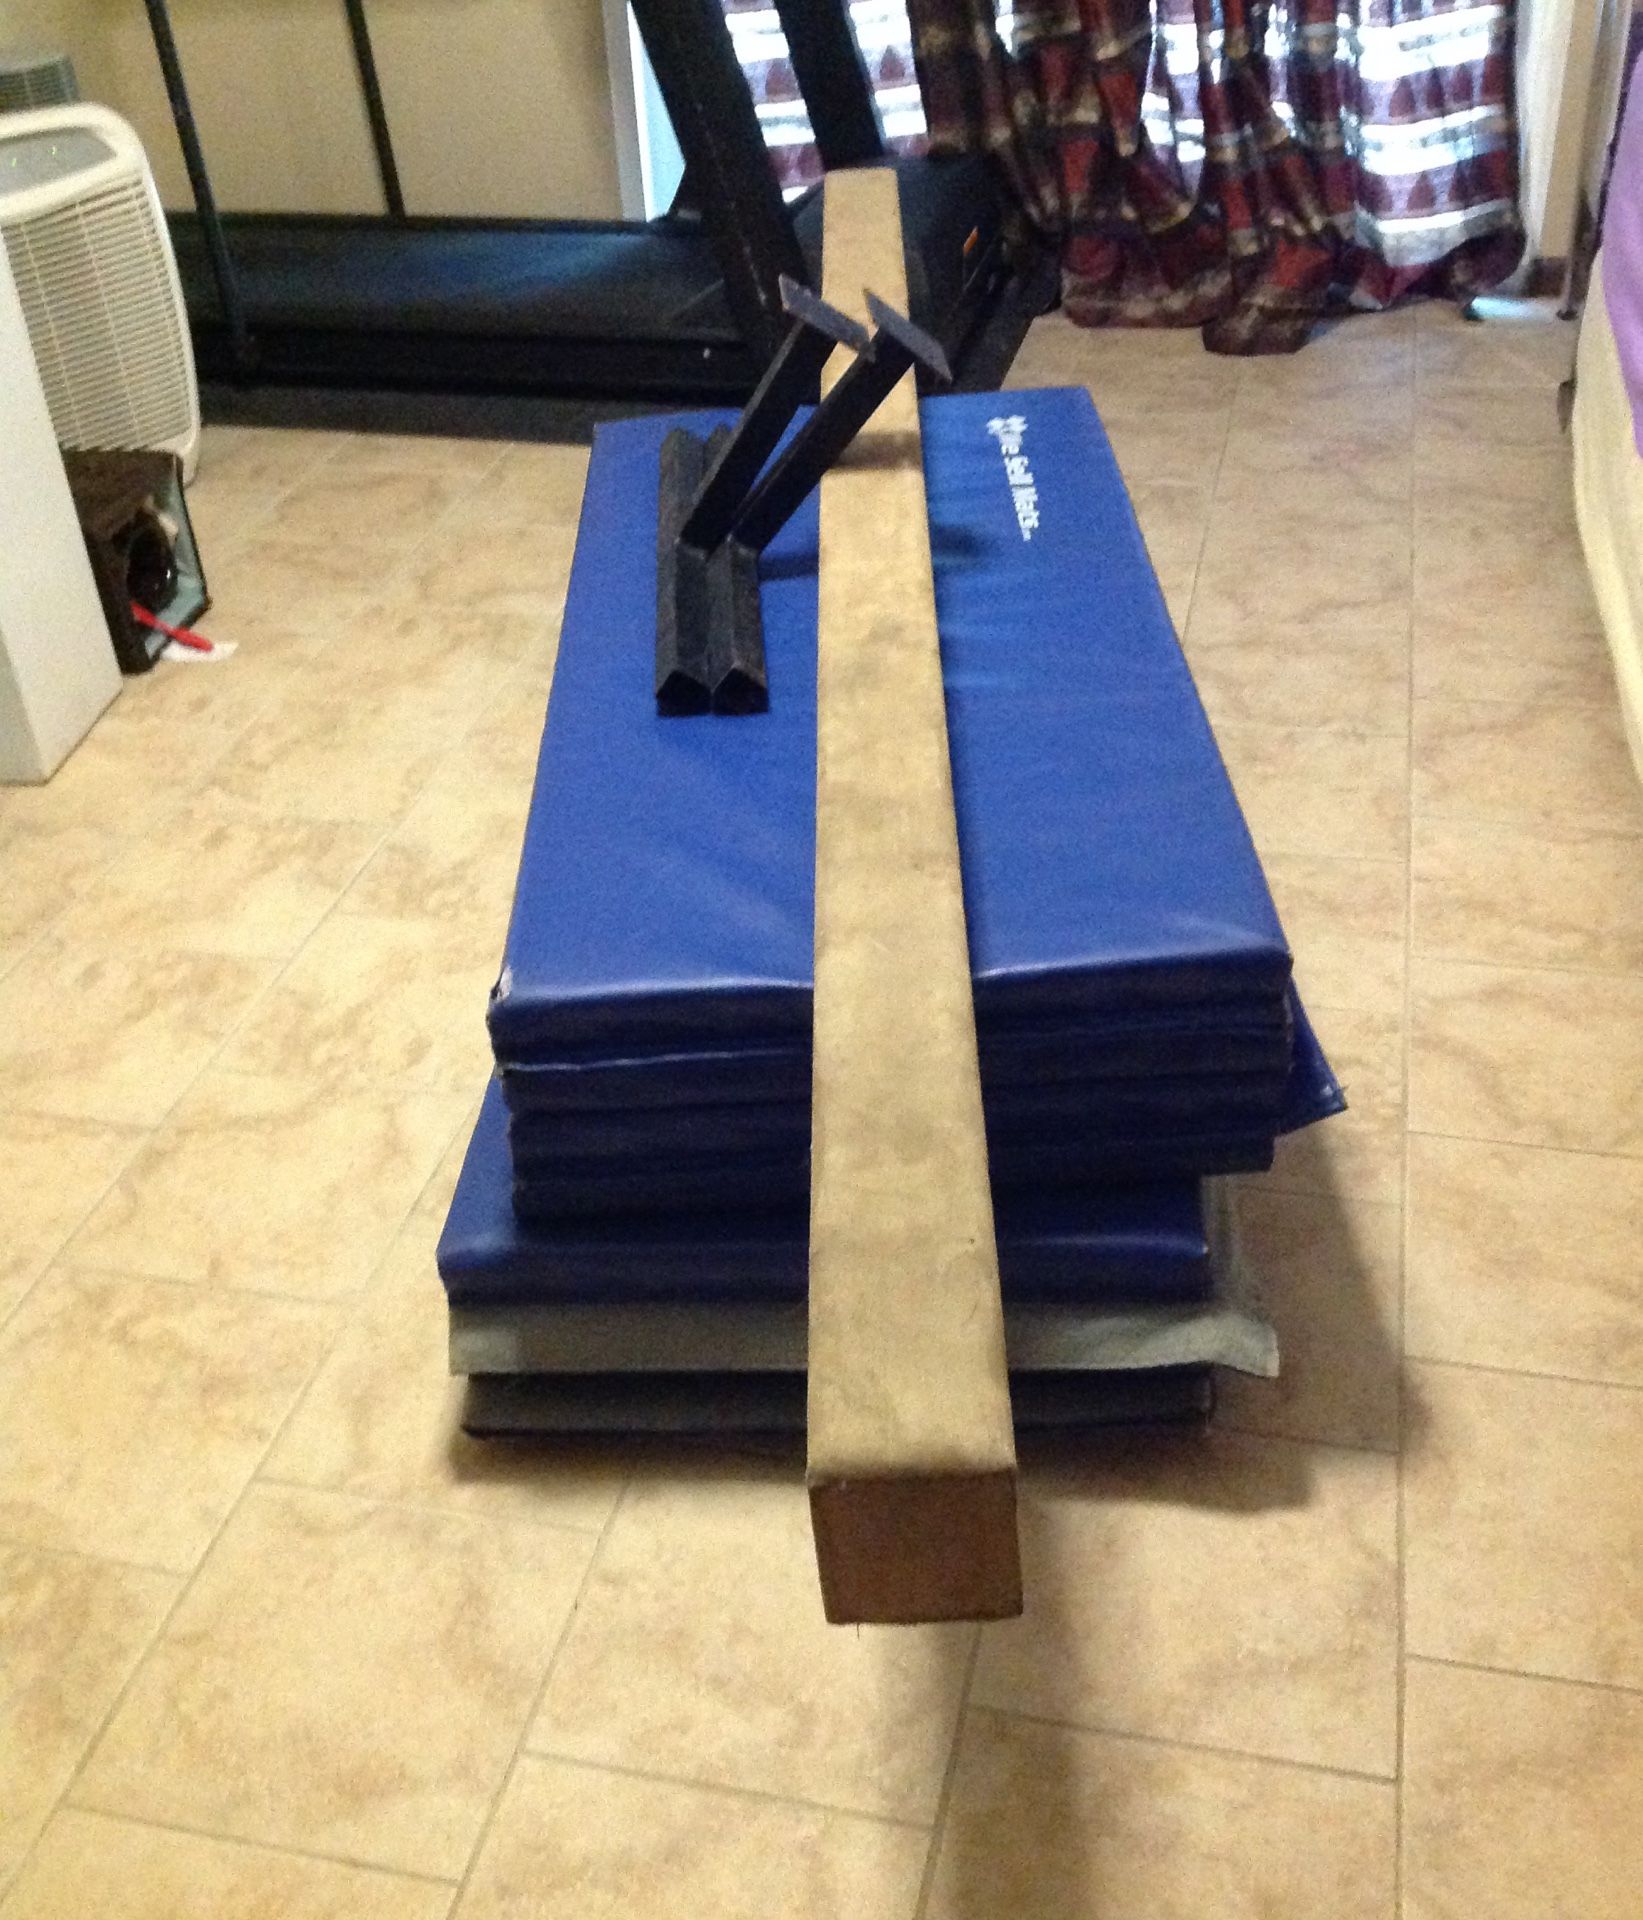 8 foot balance beam and two mats